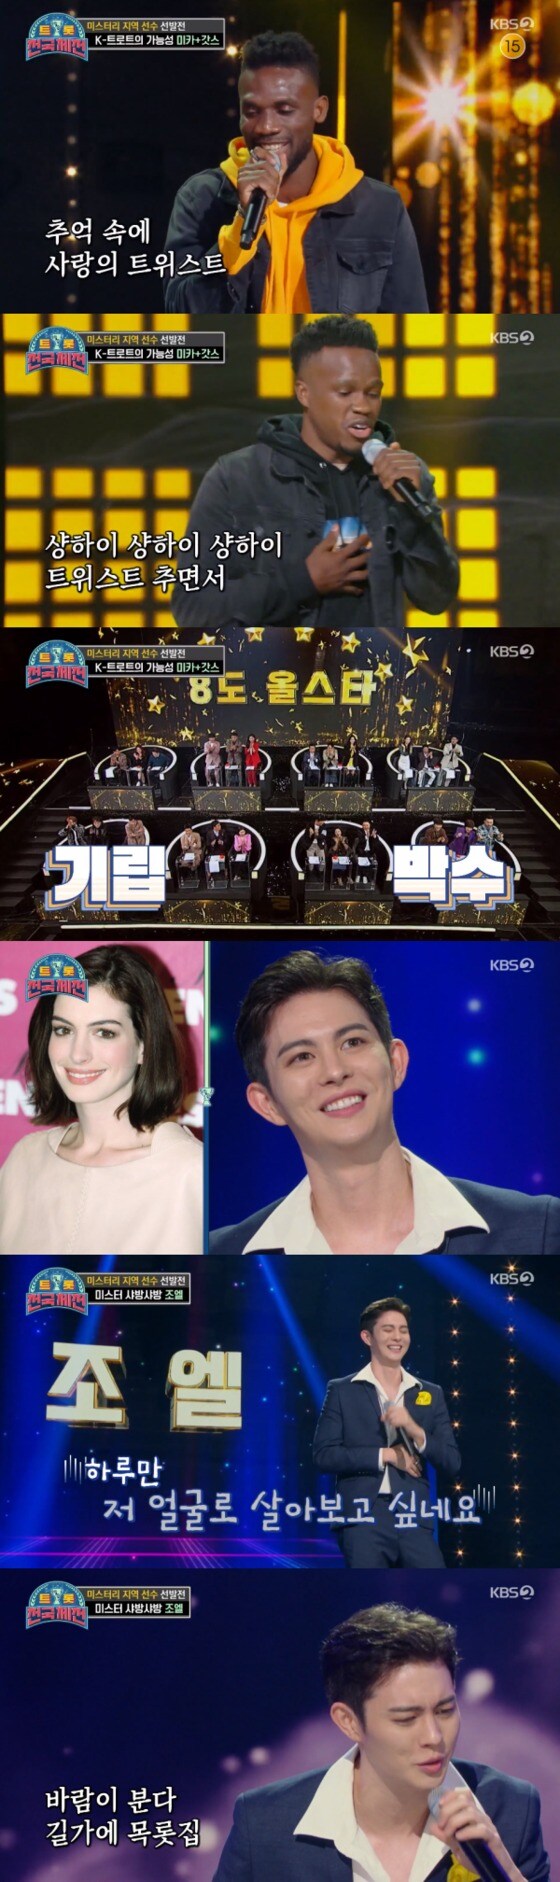 KBS 2TV '트롯 전국체전' 방송 화면 캡처 © 뉴스1